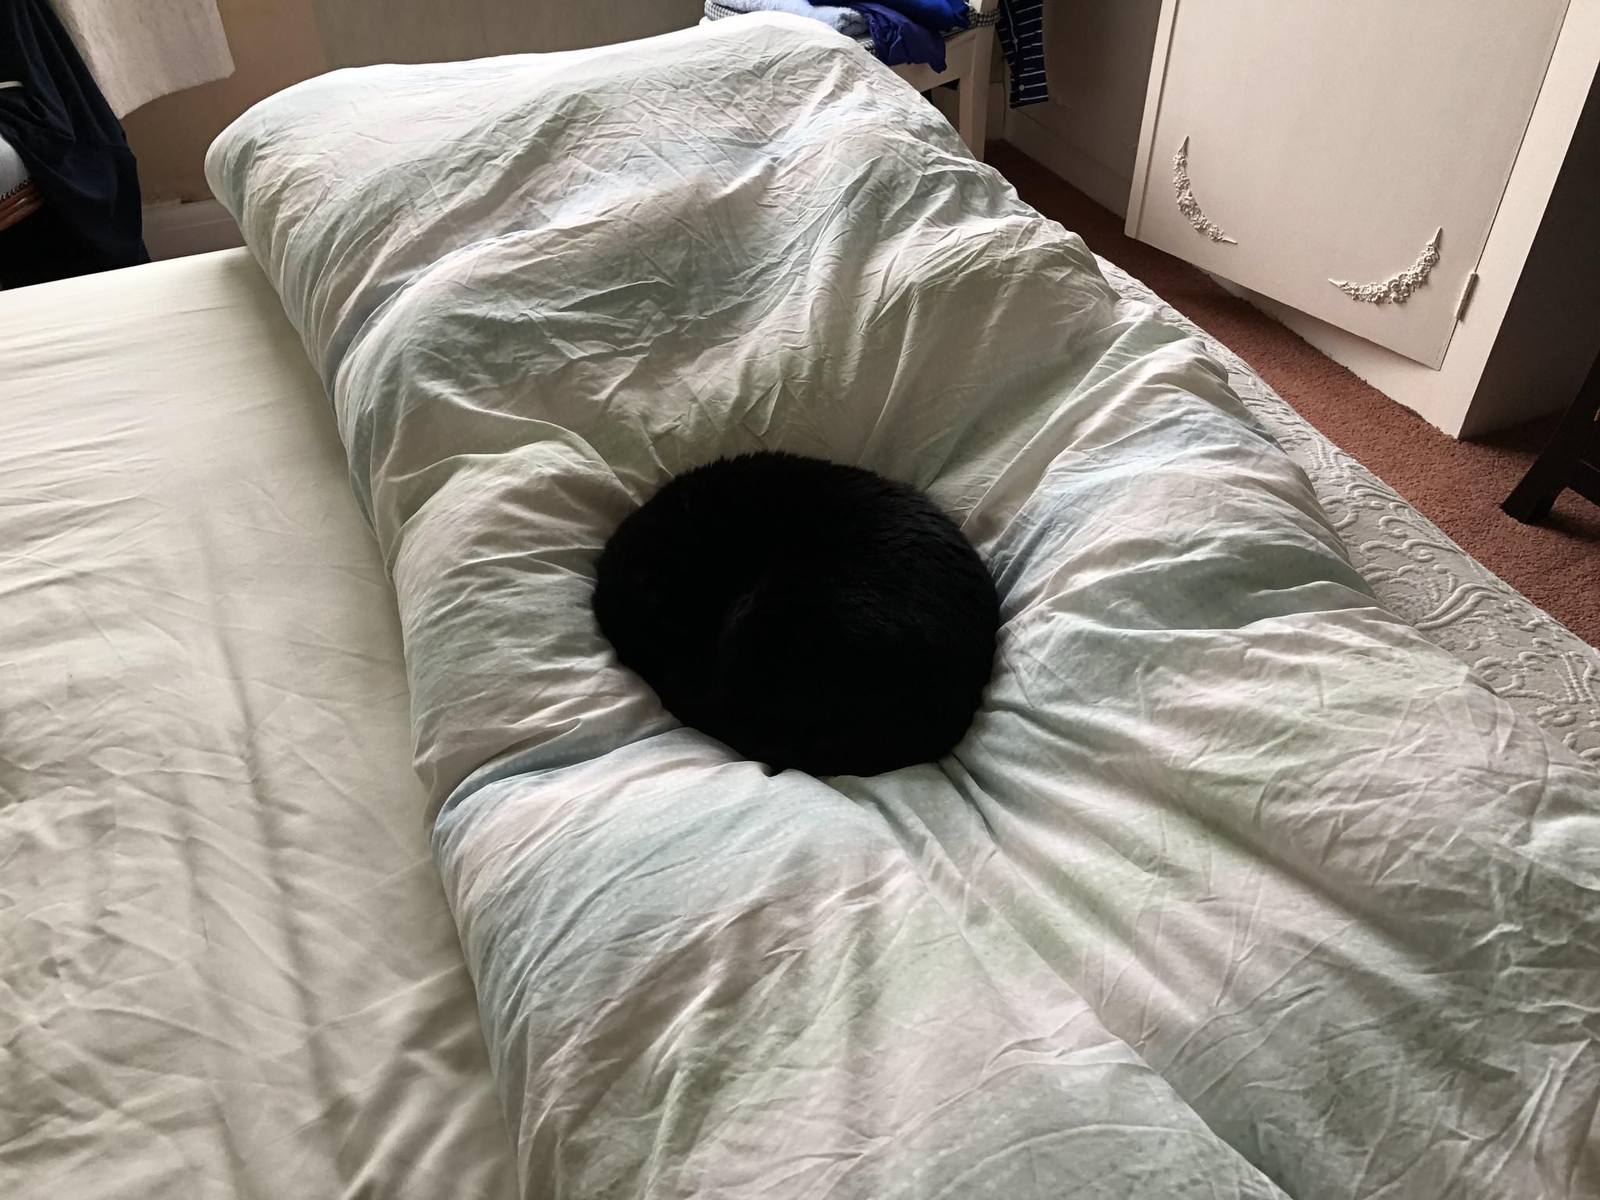 Black hole - cat, Dream, Bed